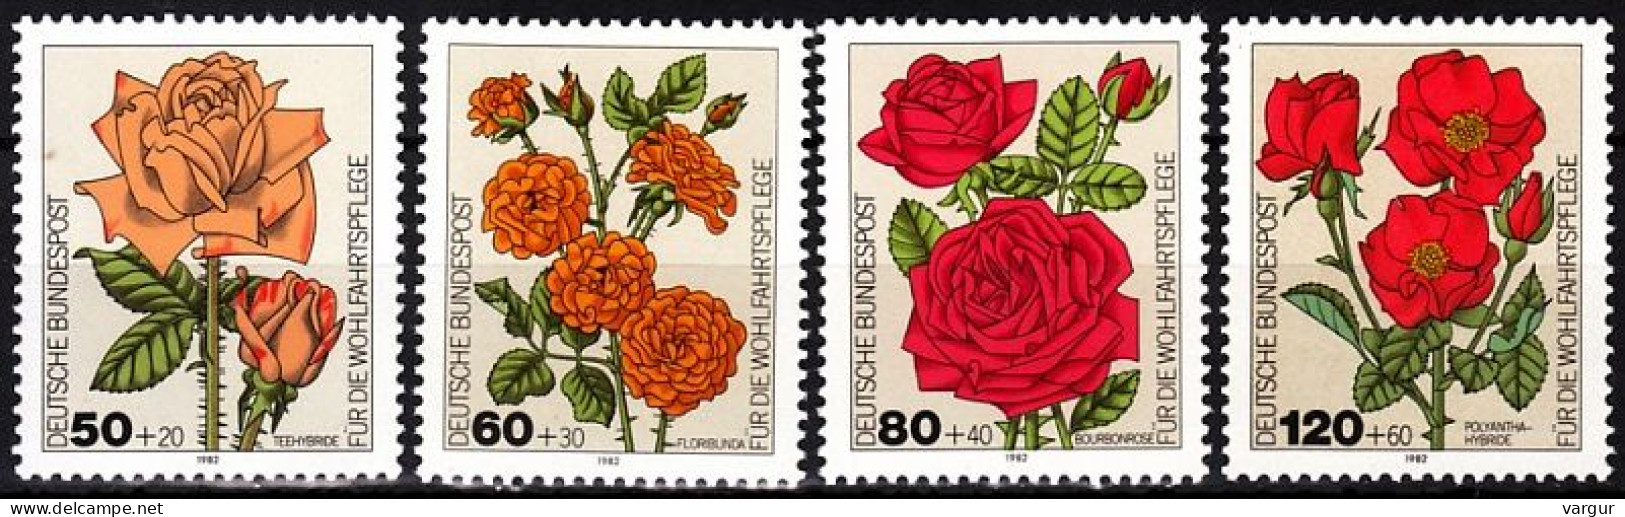 GERMANY FRG 1982 FLORA Plants Flowers: Garden Roses. Charity. Complete Set, MNH - Rosas